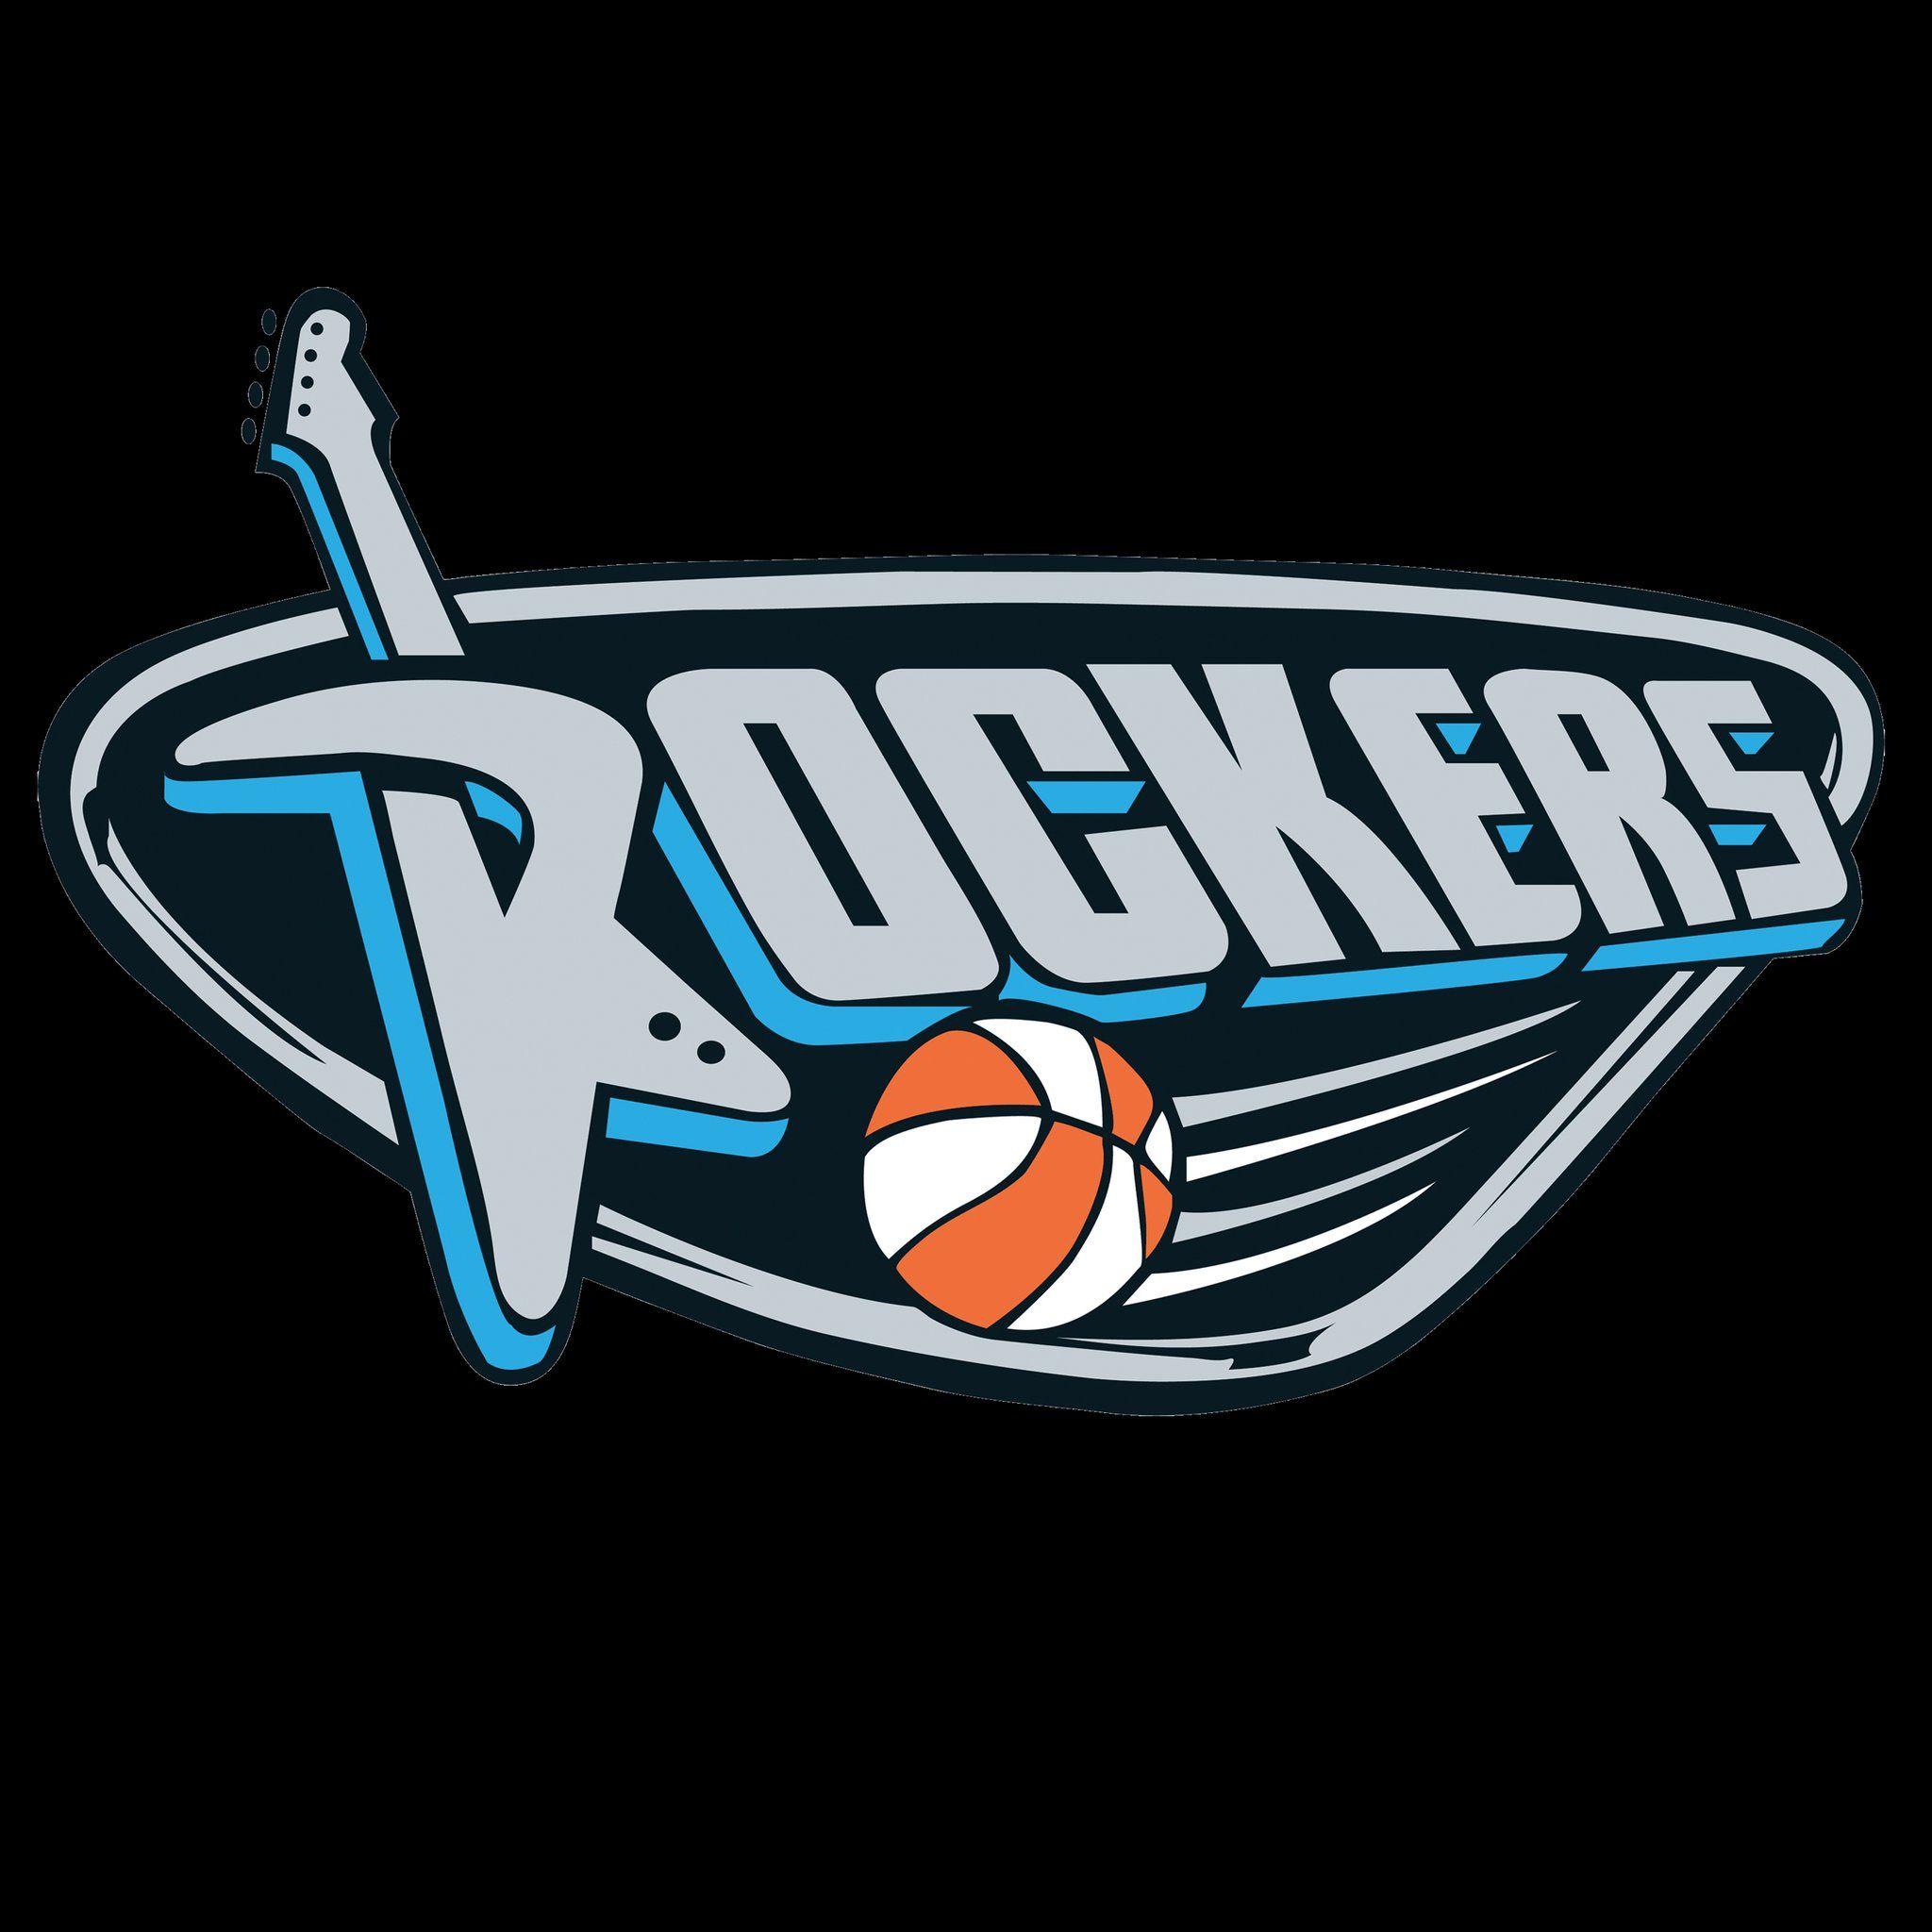 Rockers Logo - Cleveland Rockers Basketball | Old School Shirts - OldSchoolShirts.com